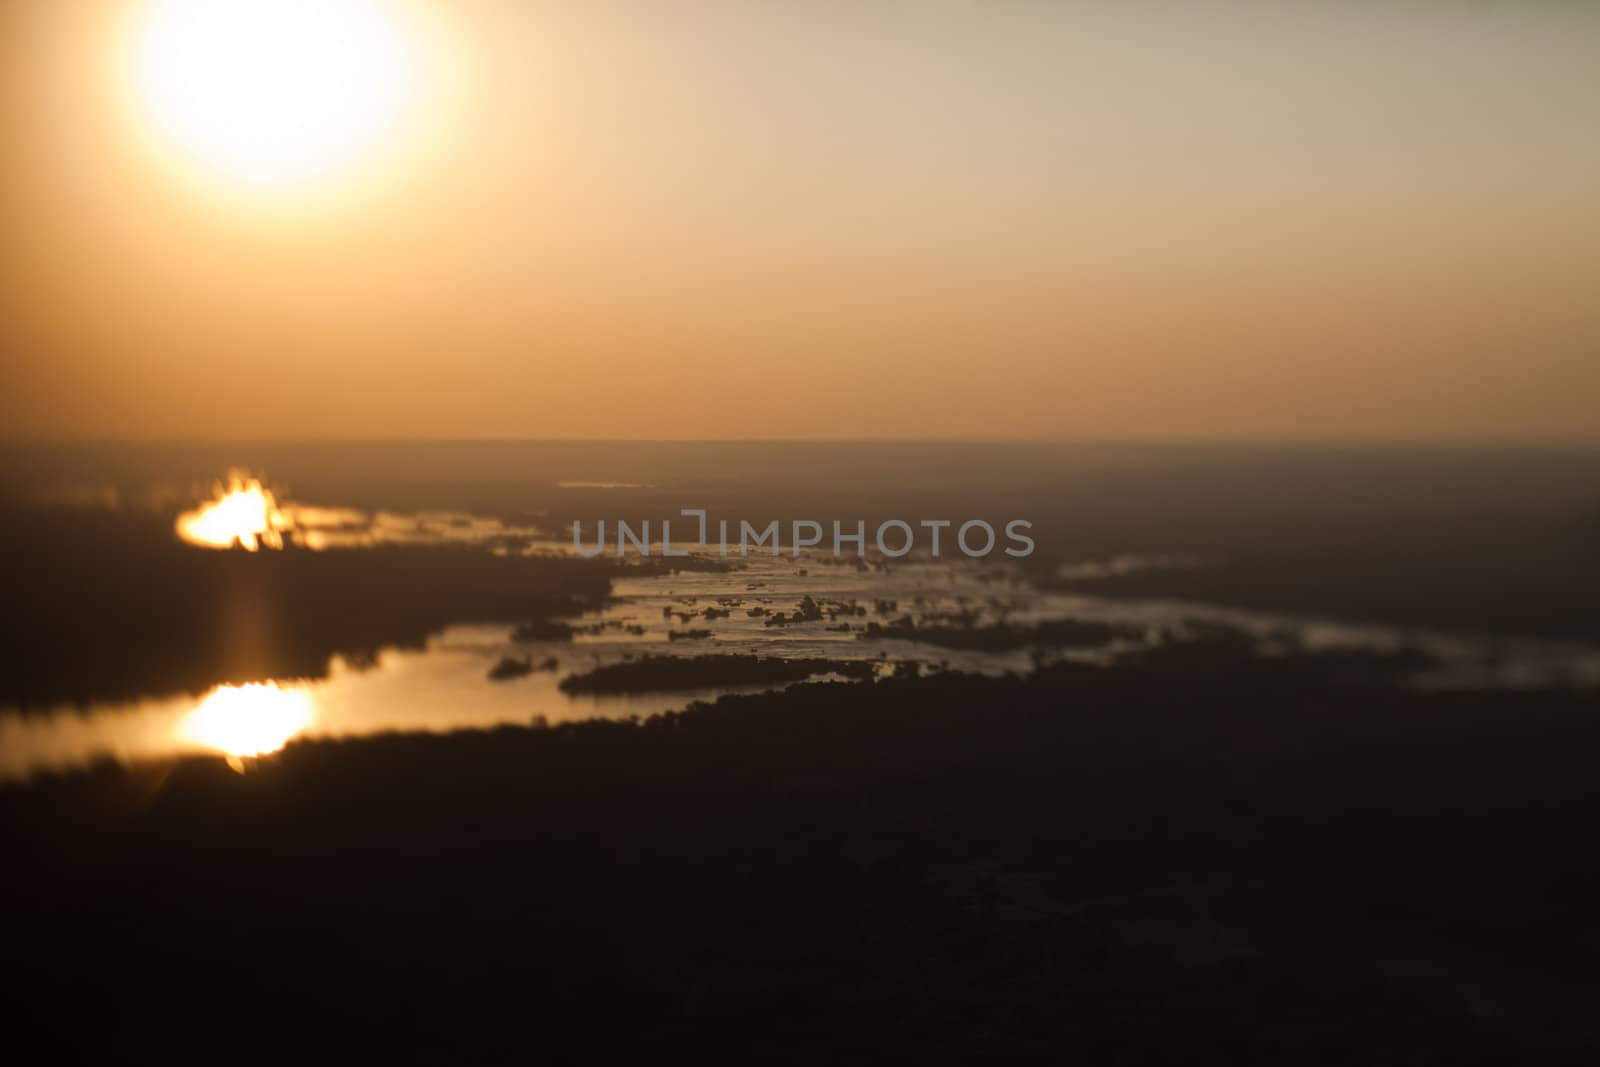 Aerial view of the Zambezi river, tilt shift effect